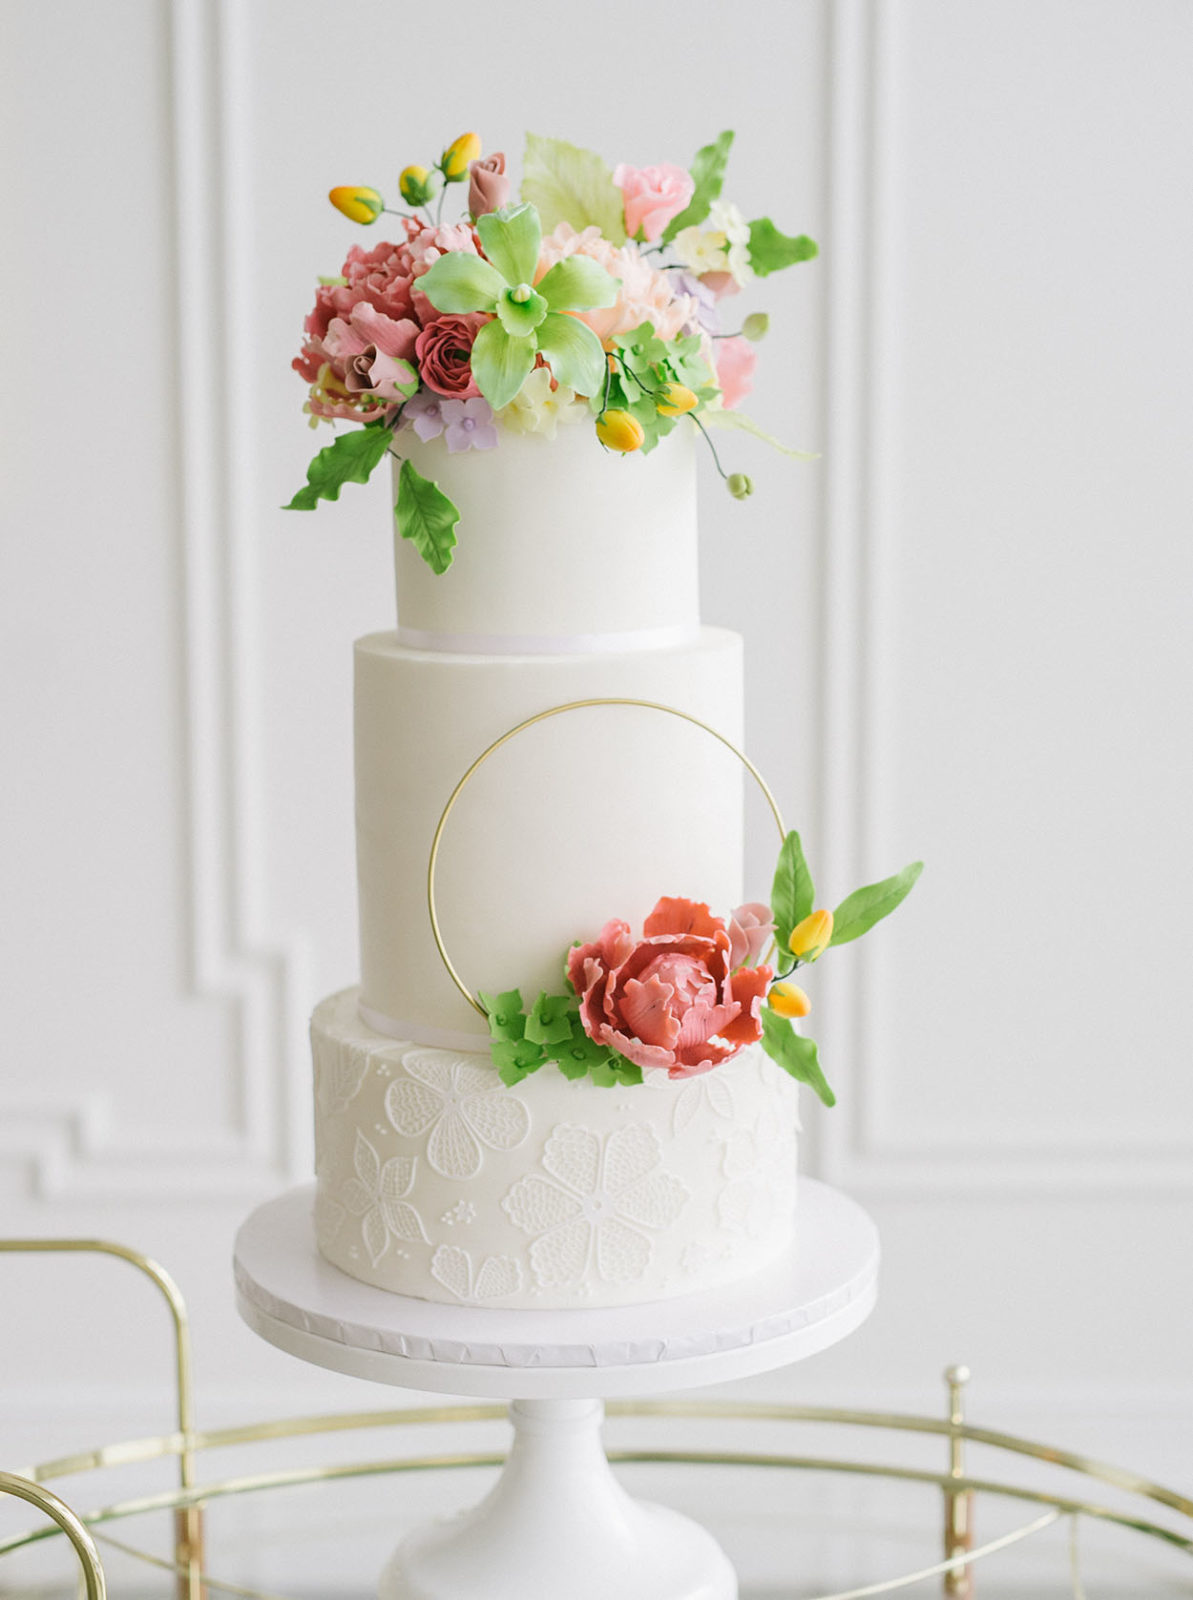 Monochromatic white wedding cake with colourful sugar flowers